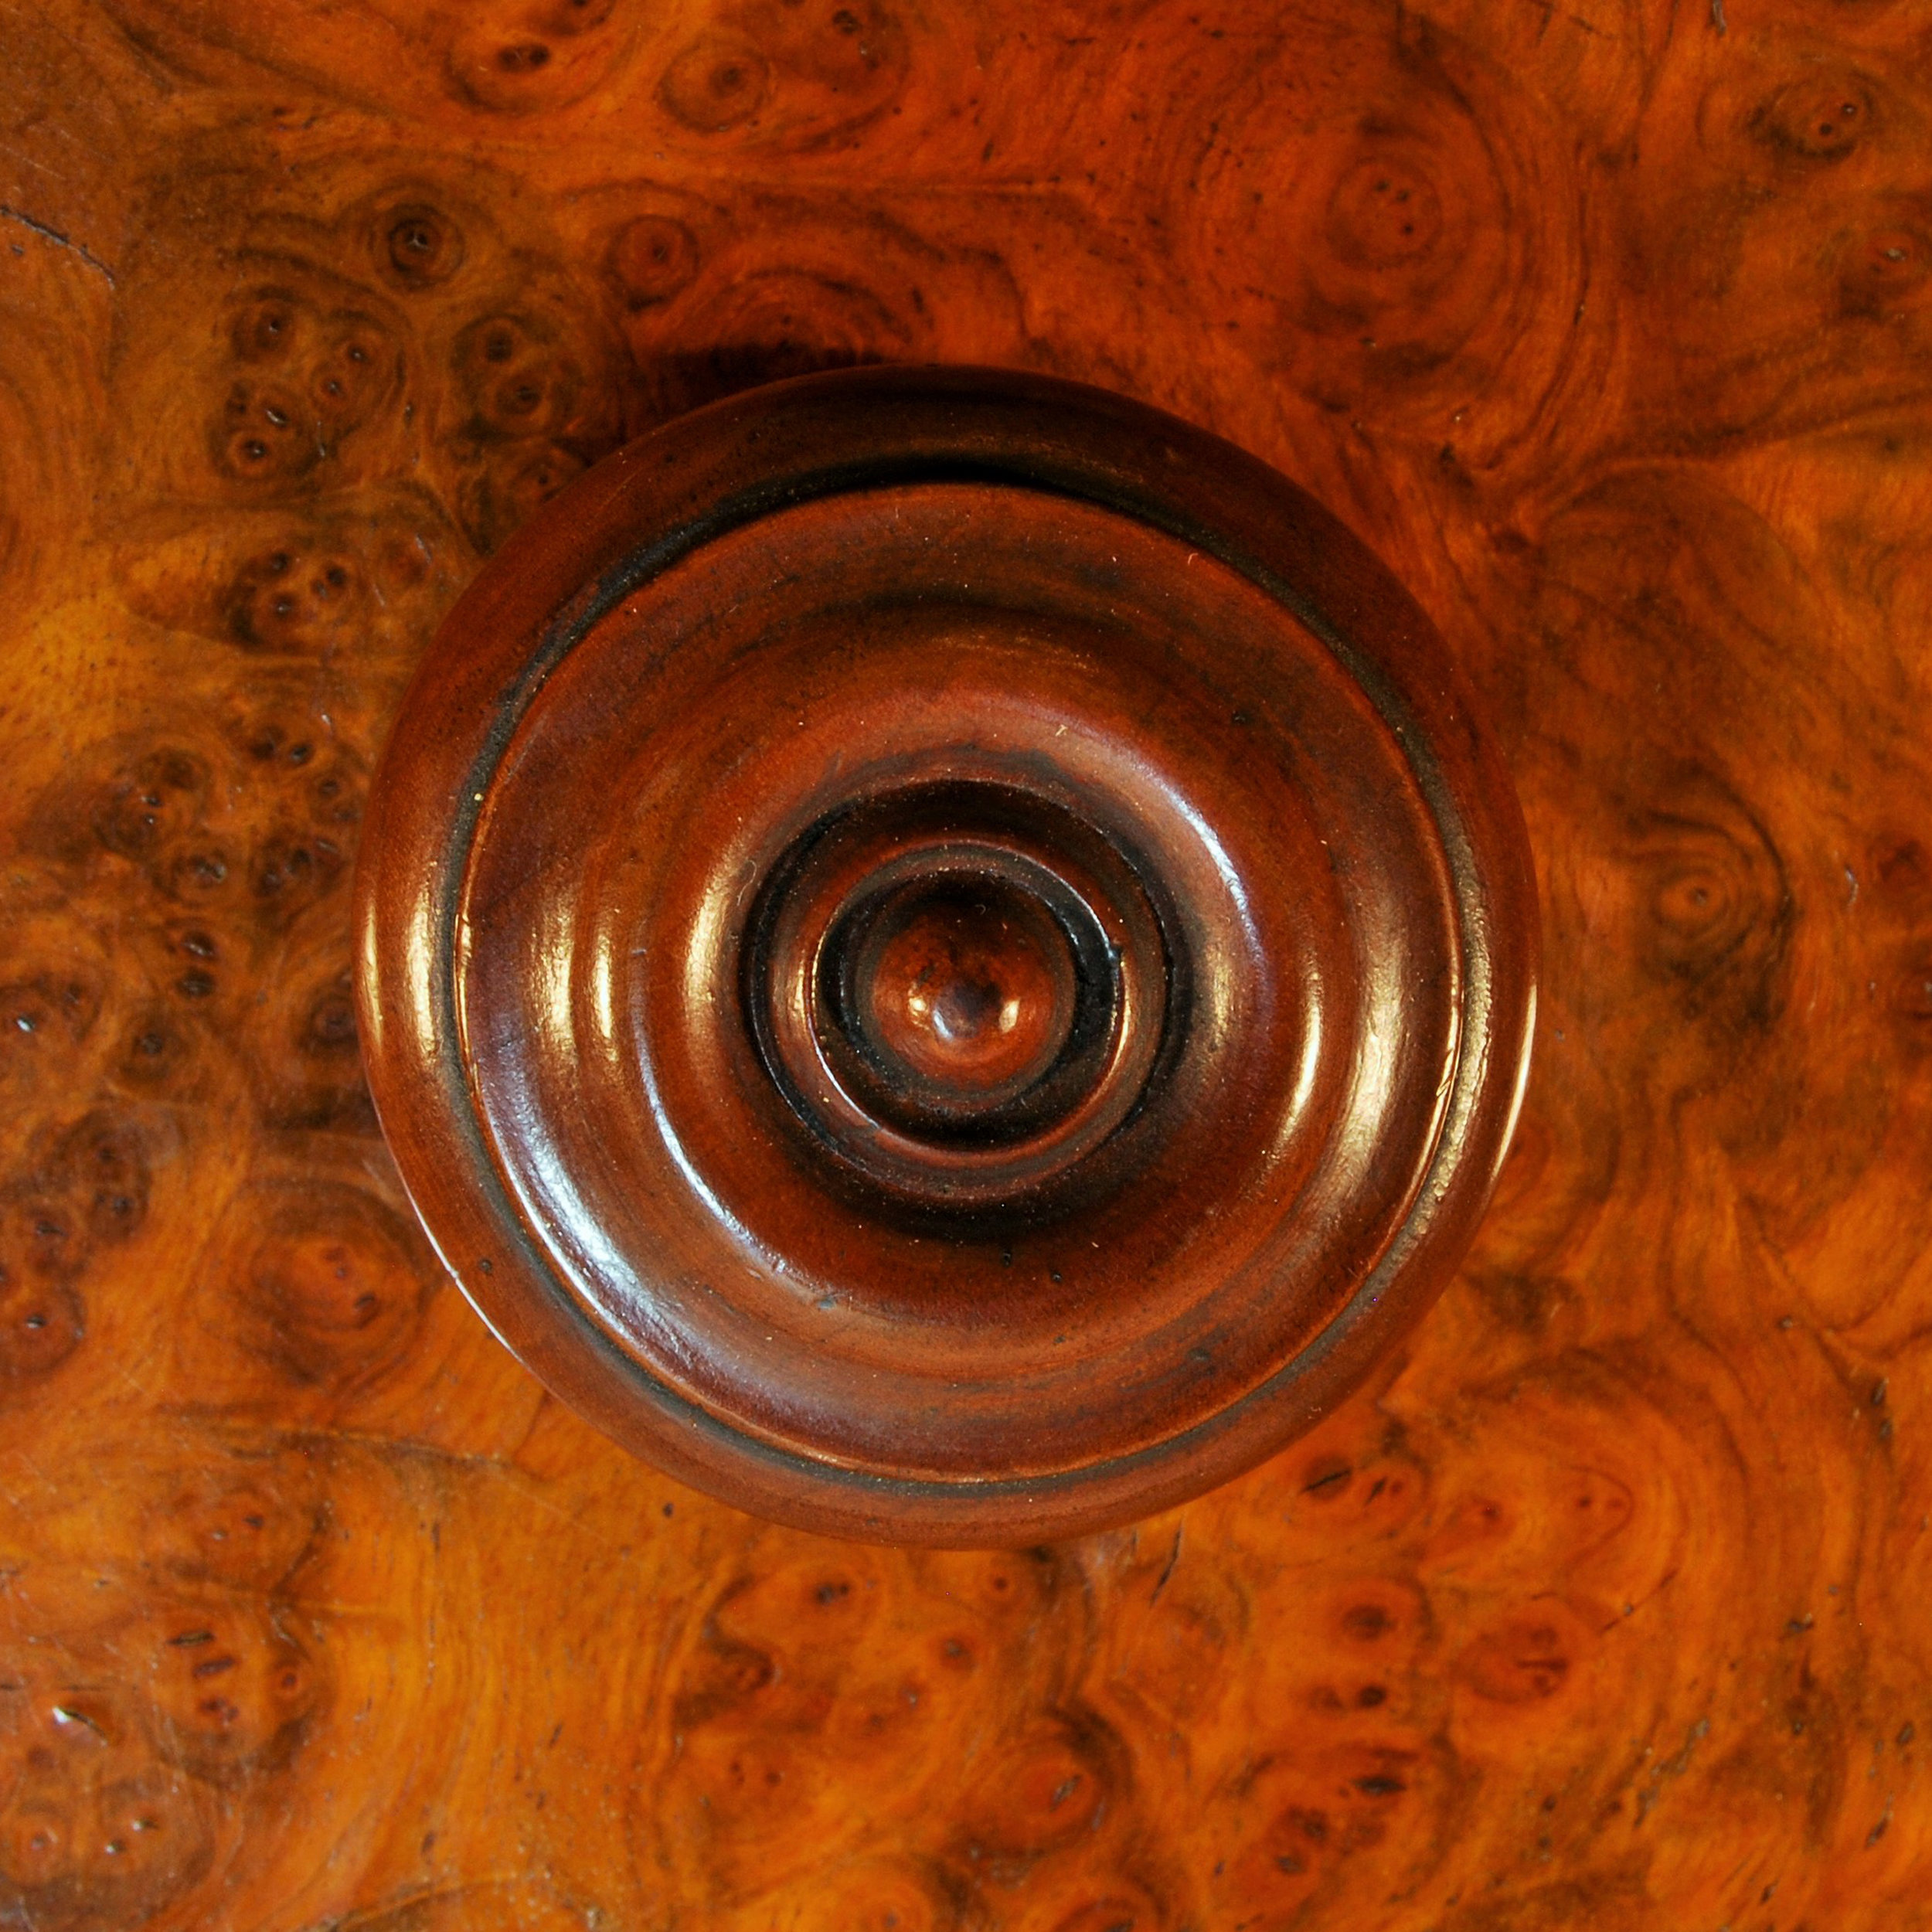 Victorian burr walnut tabletop stereoscope